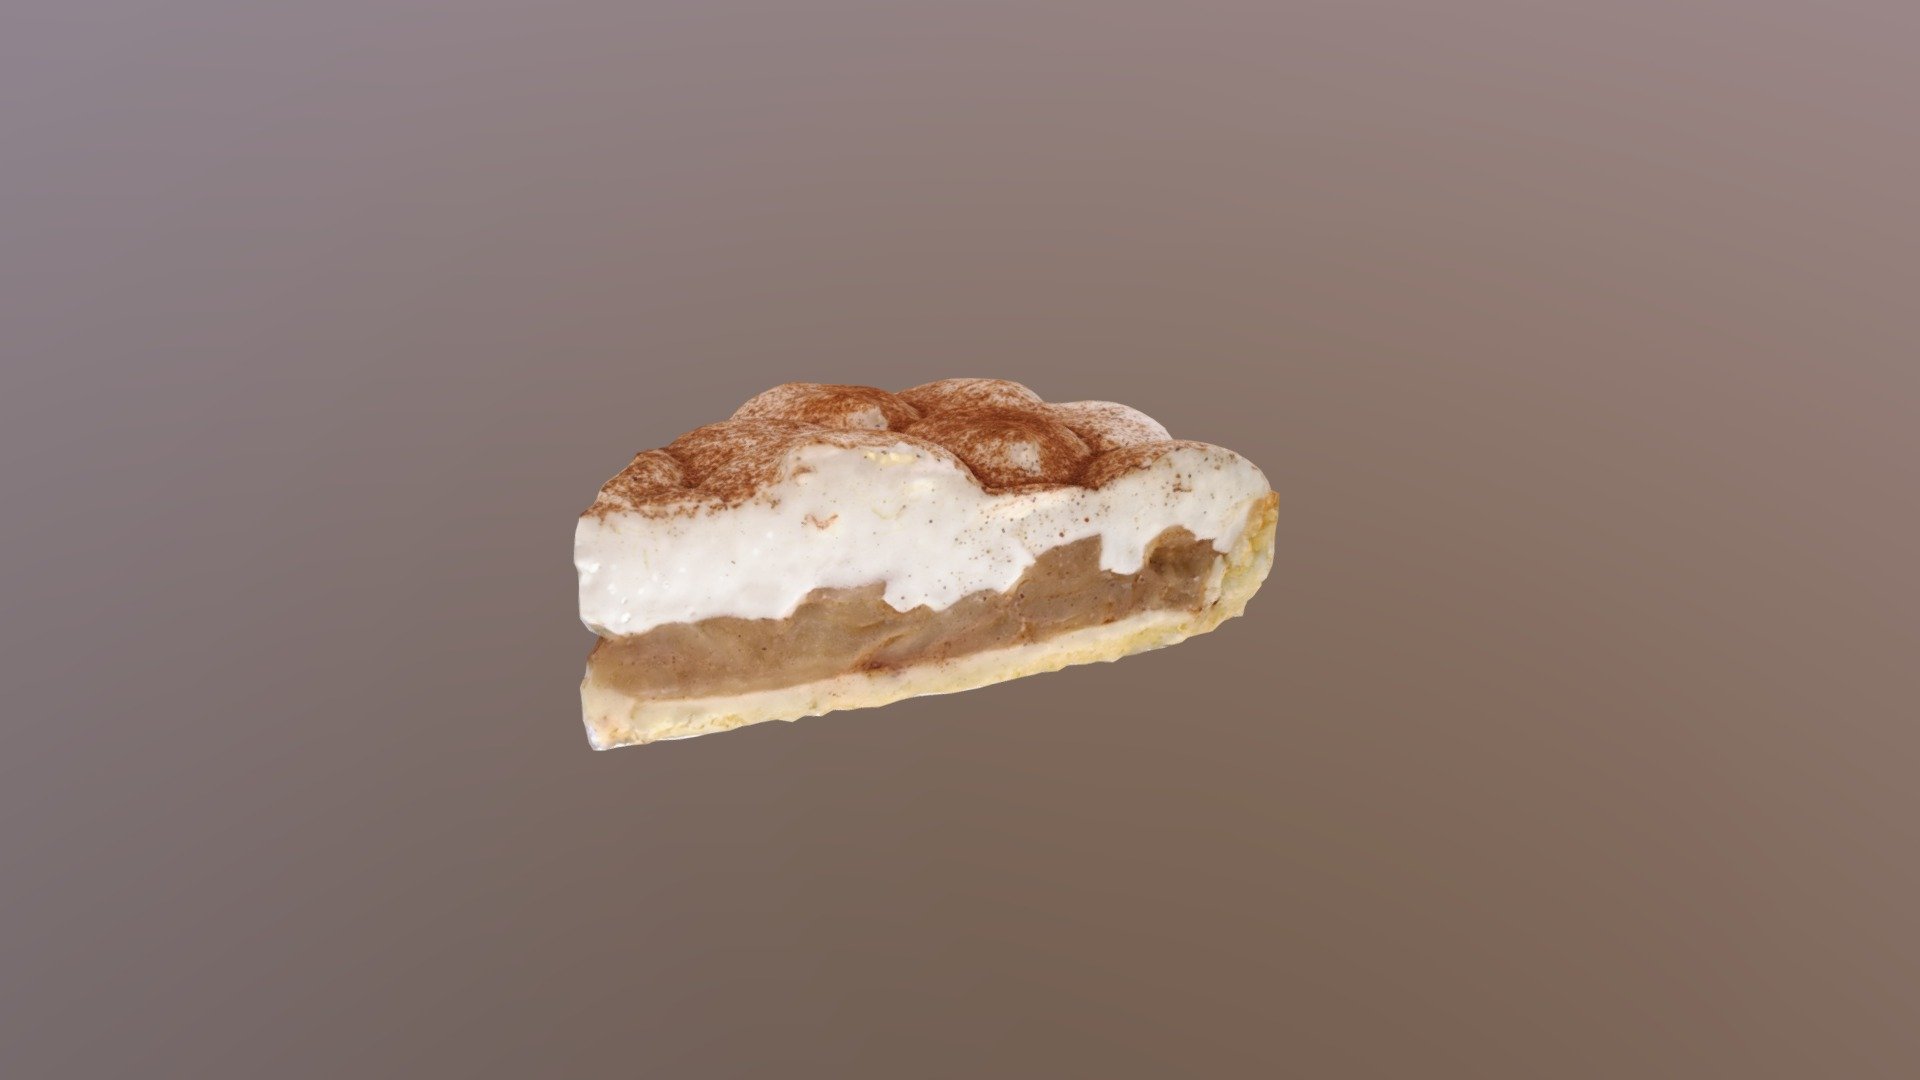 Apple pie with sour cream